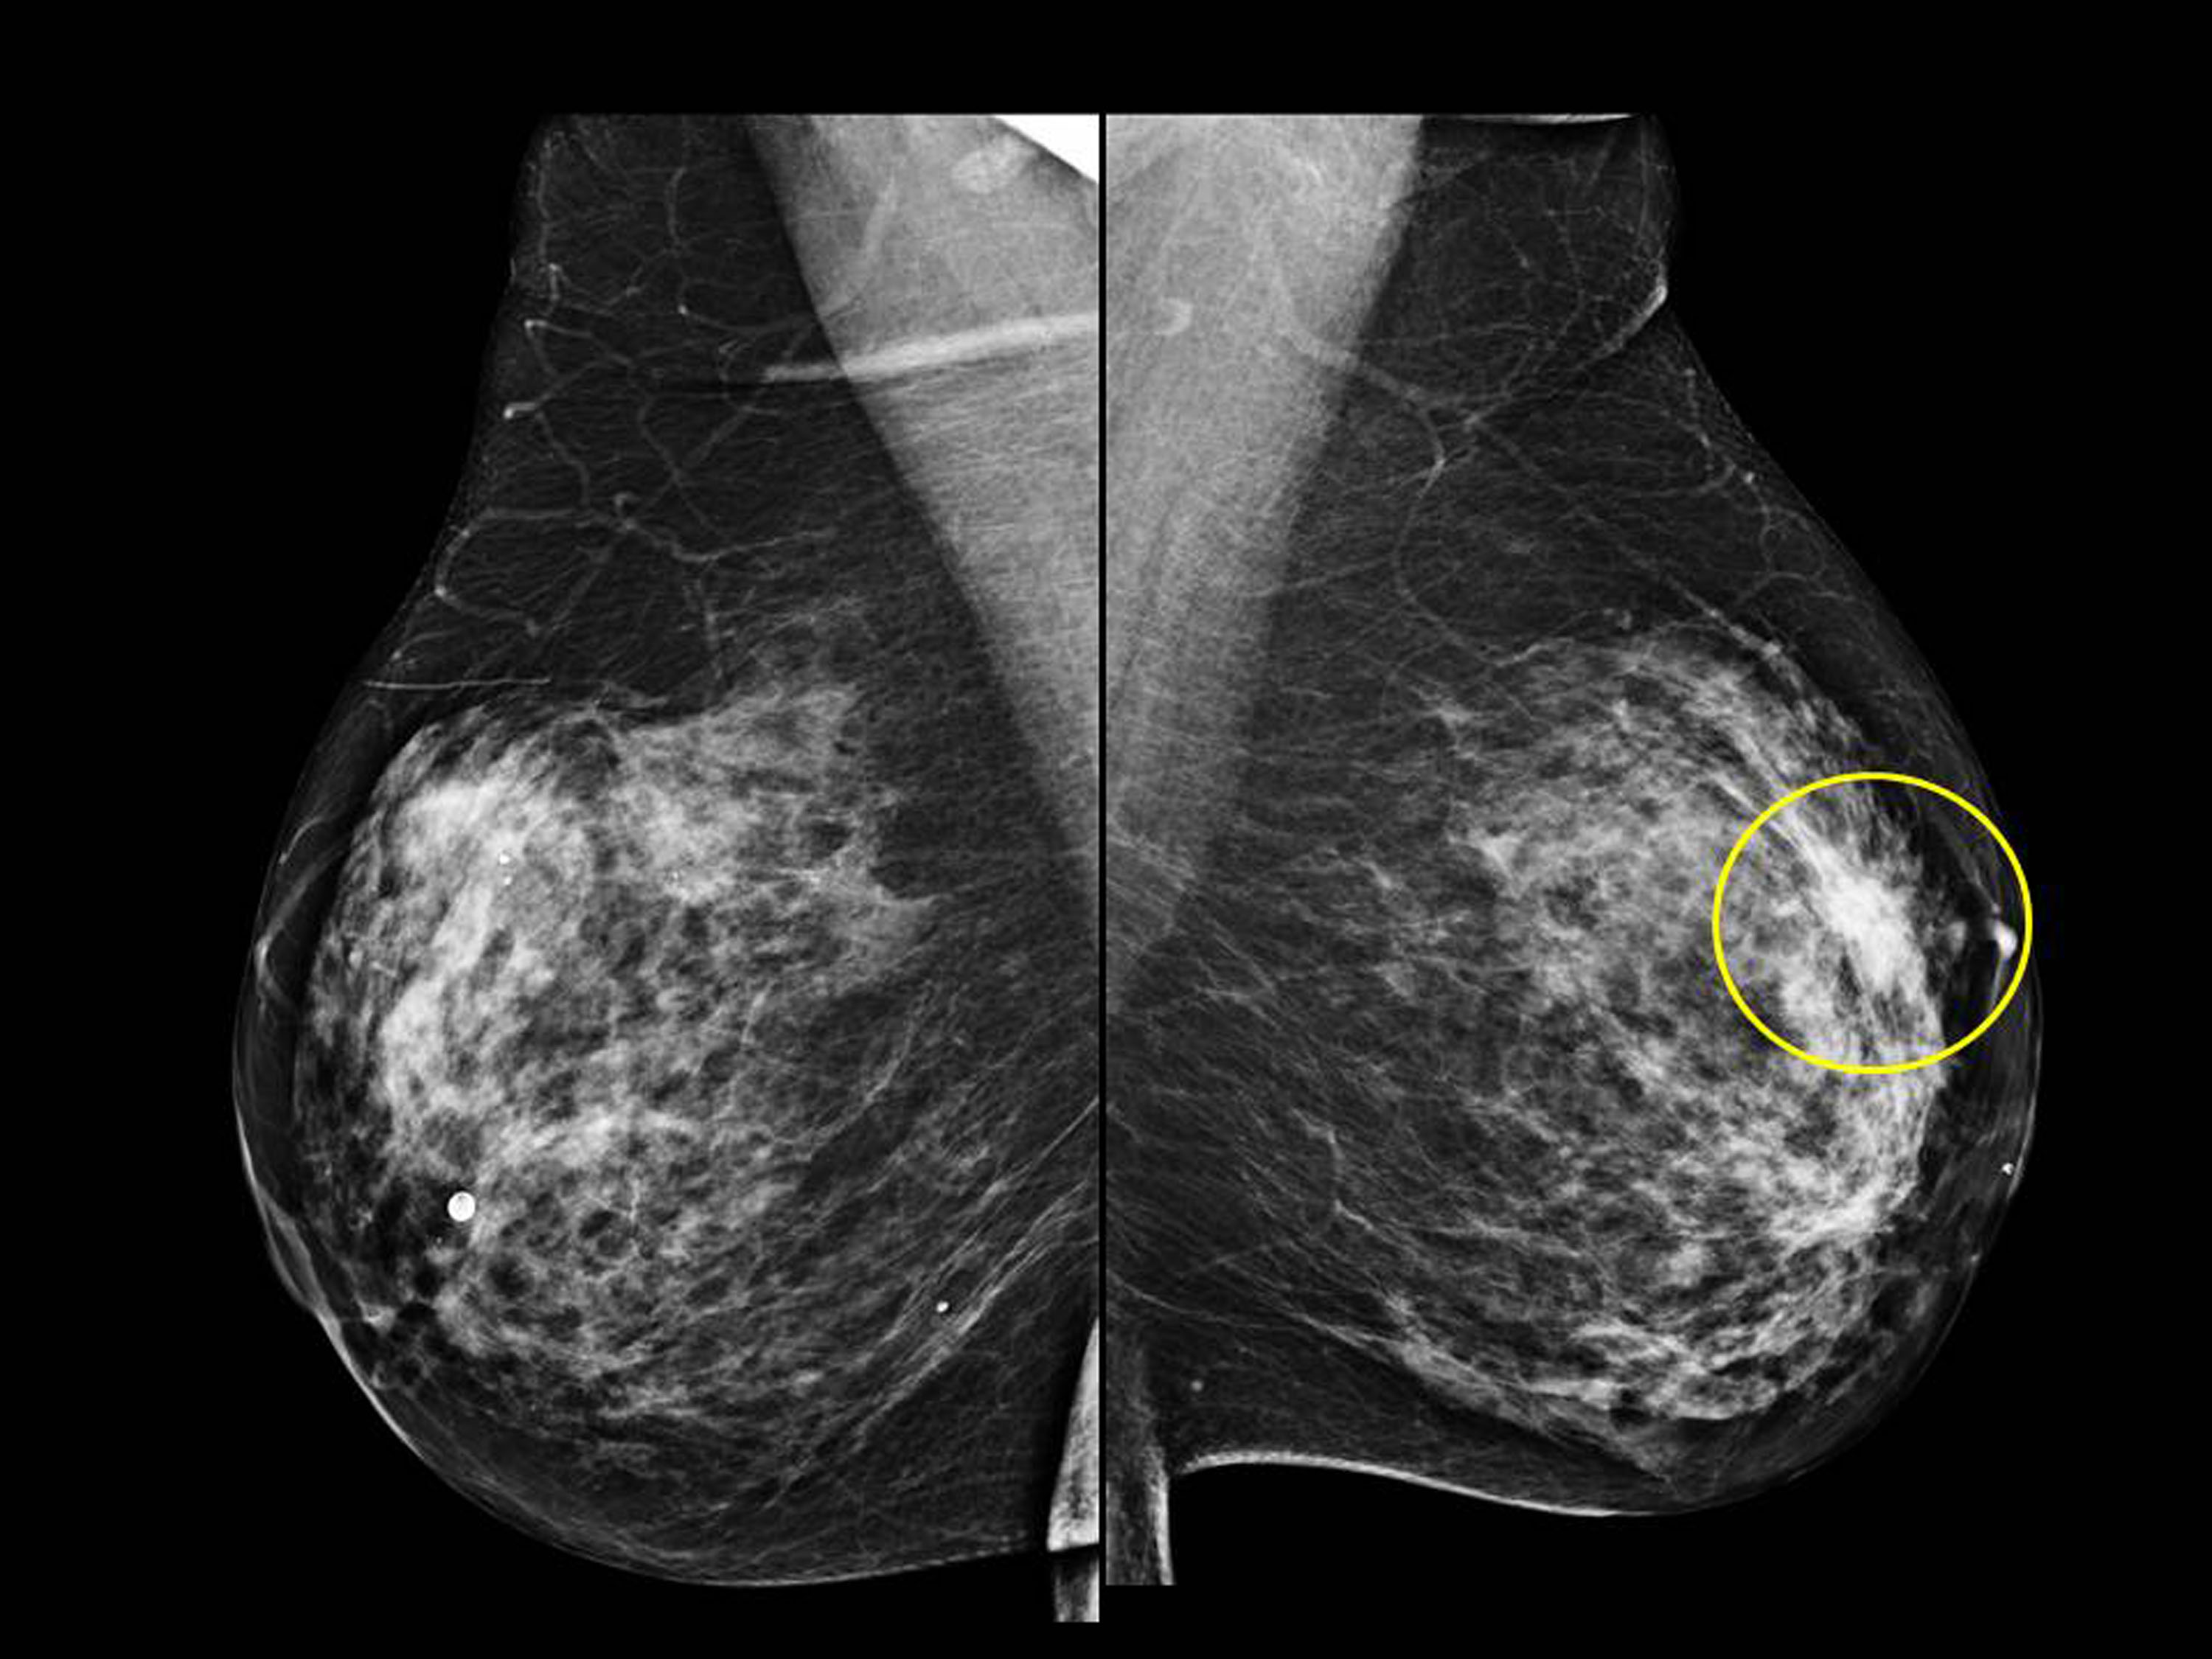 Digital tomosynthesis breast